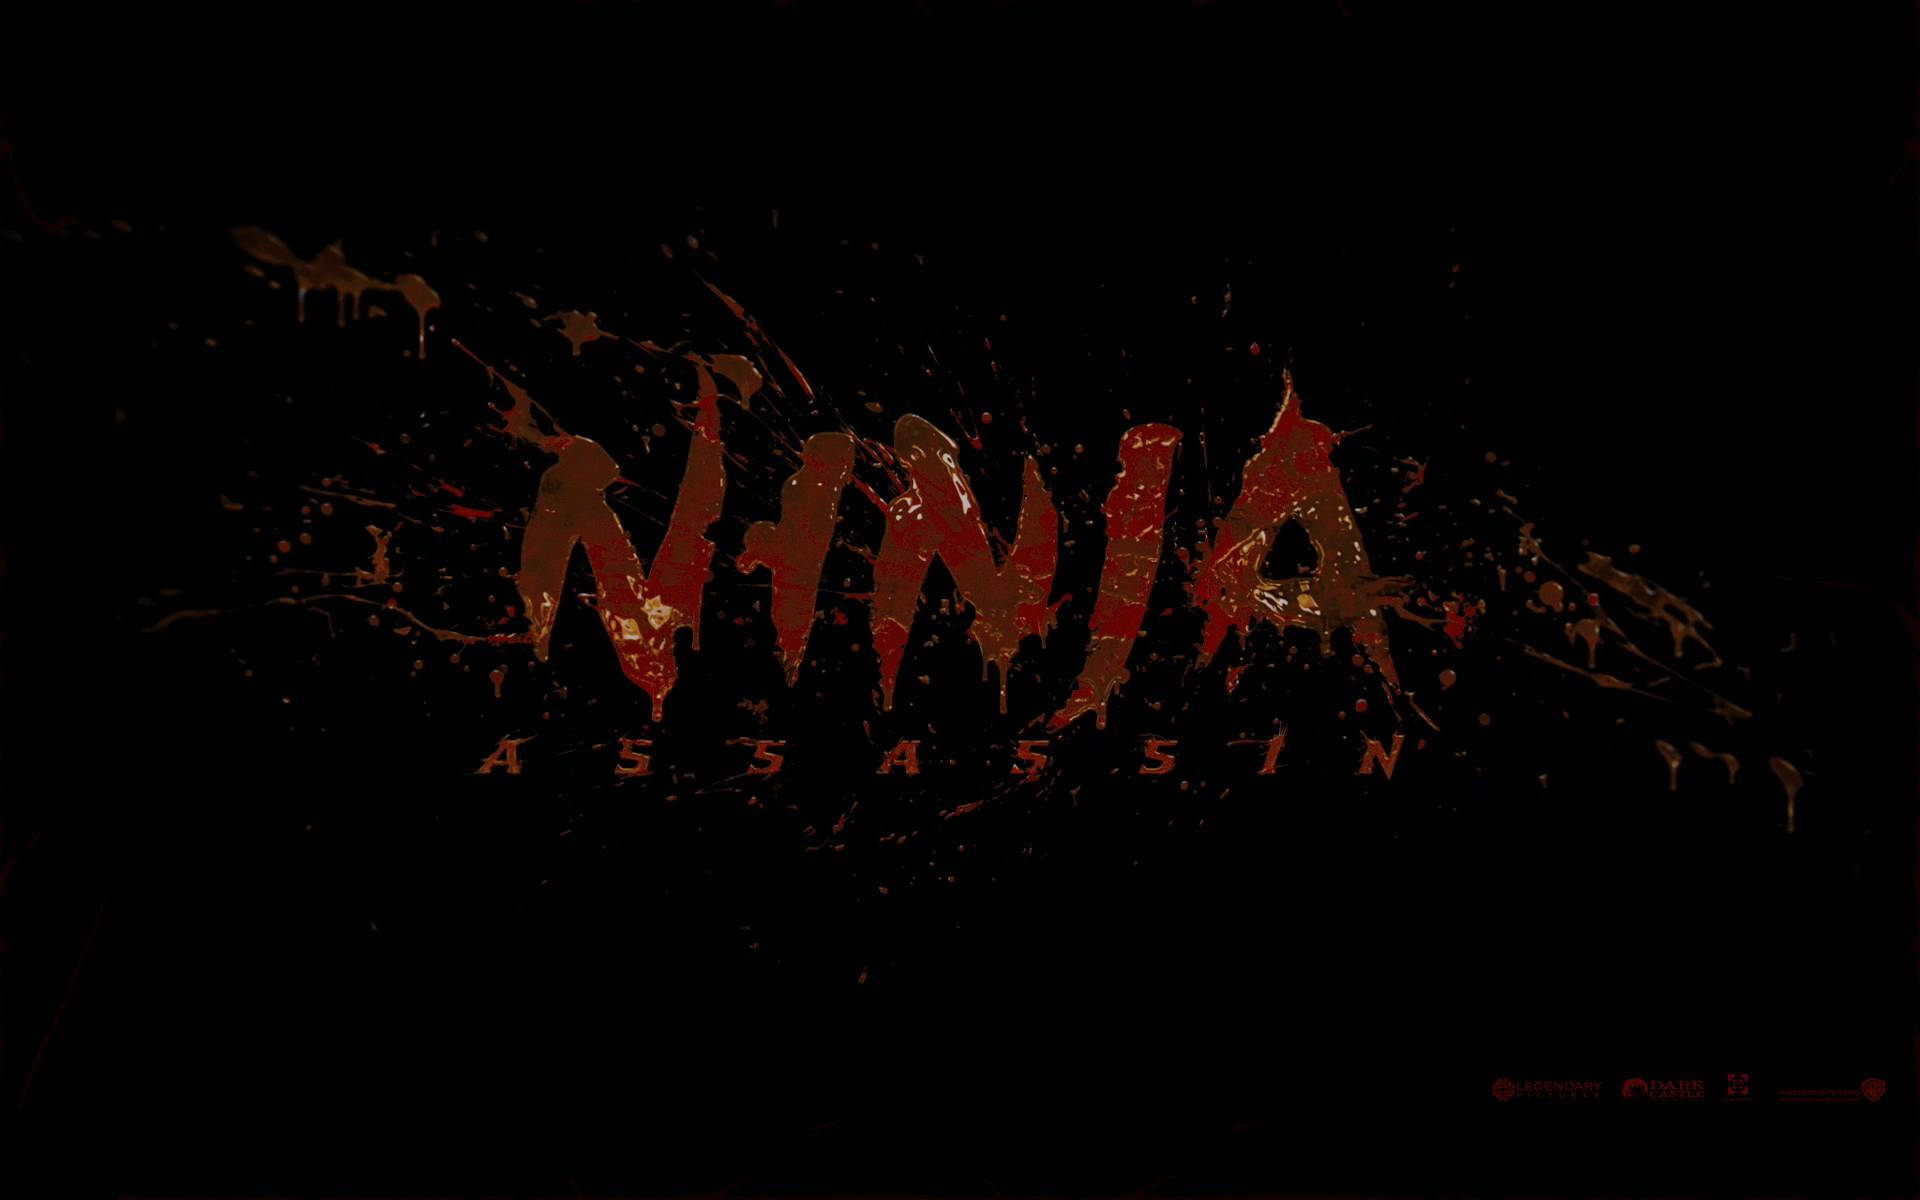 Free Ninja Wallpaper Downloads, [100+] Ninja Wallpapers for FREE |  